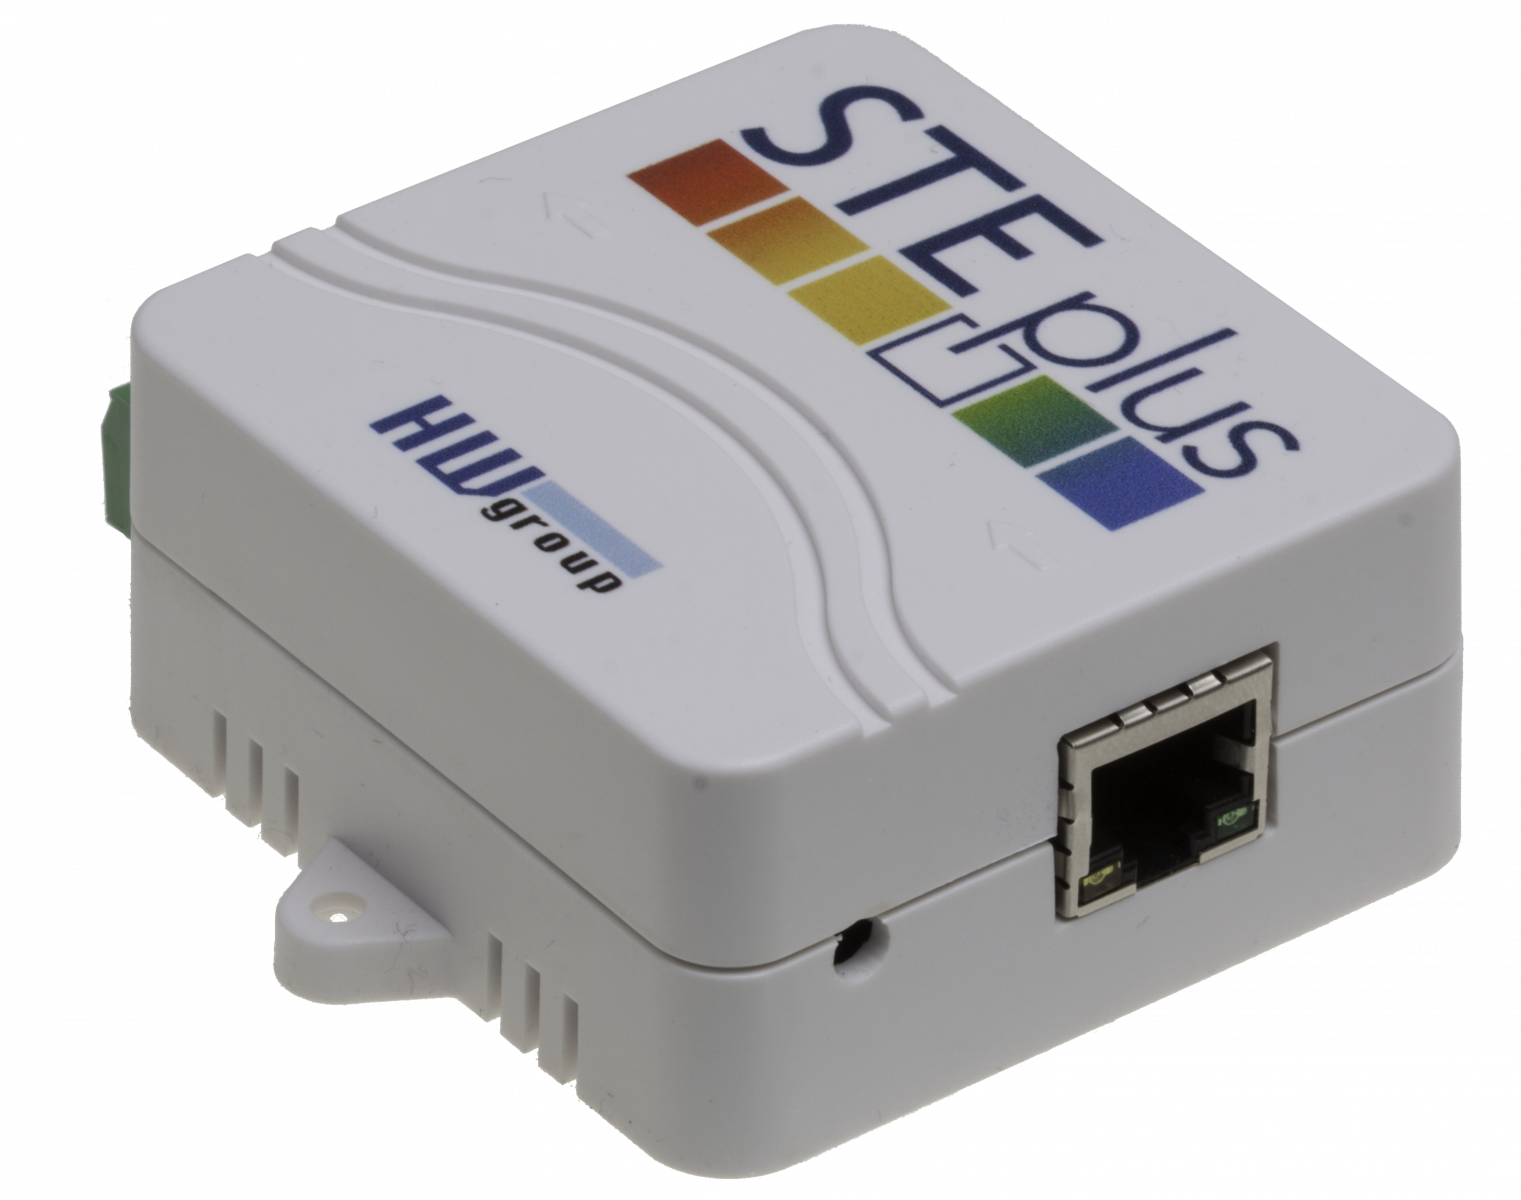 Sistema di monitoraggio IP WiFi HWg-STE2 R2/Plus Elsist